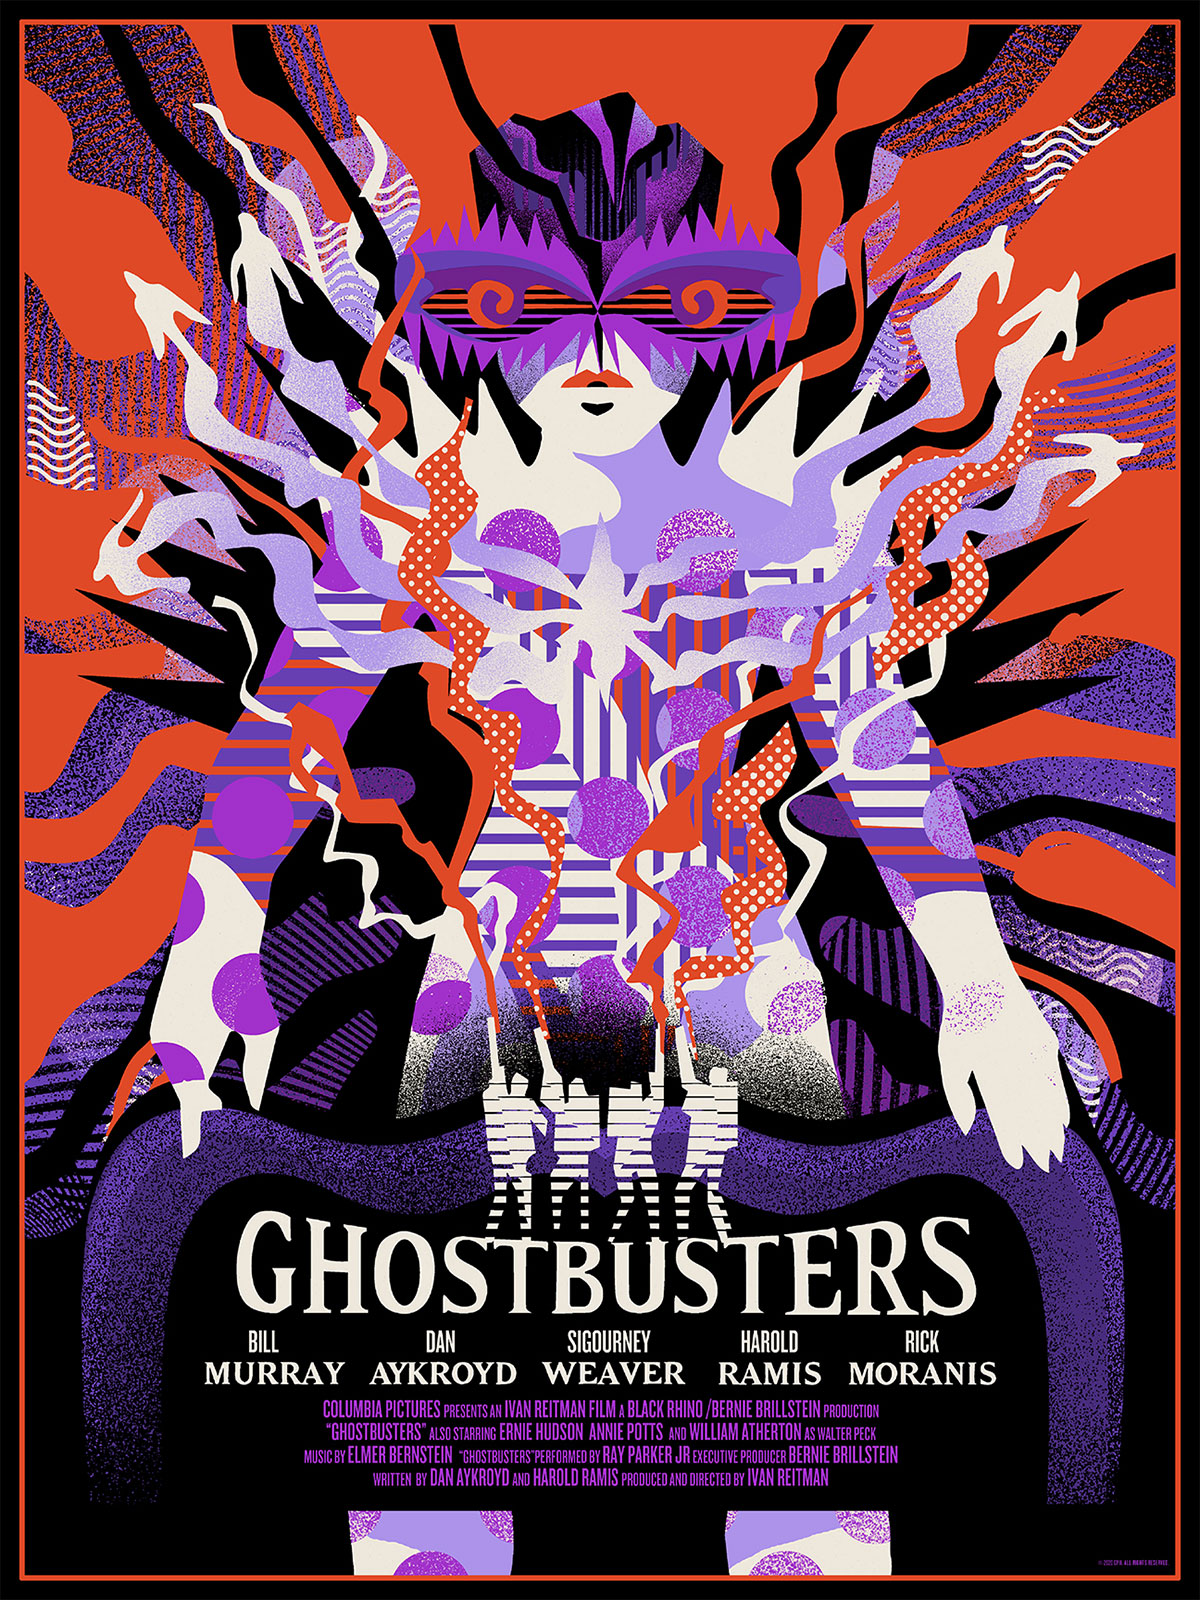 Ghostbusters - We Buy Your Kids (Image: Mondo)